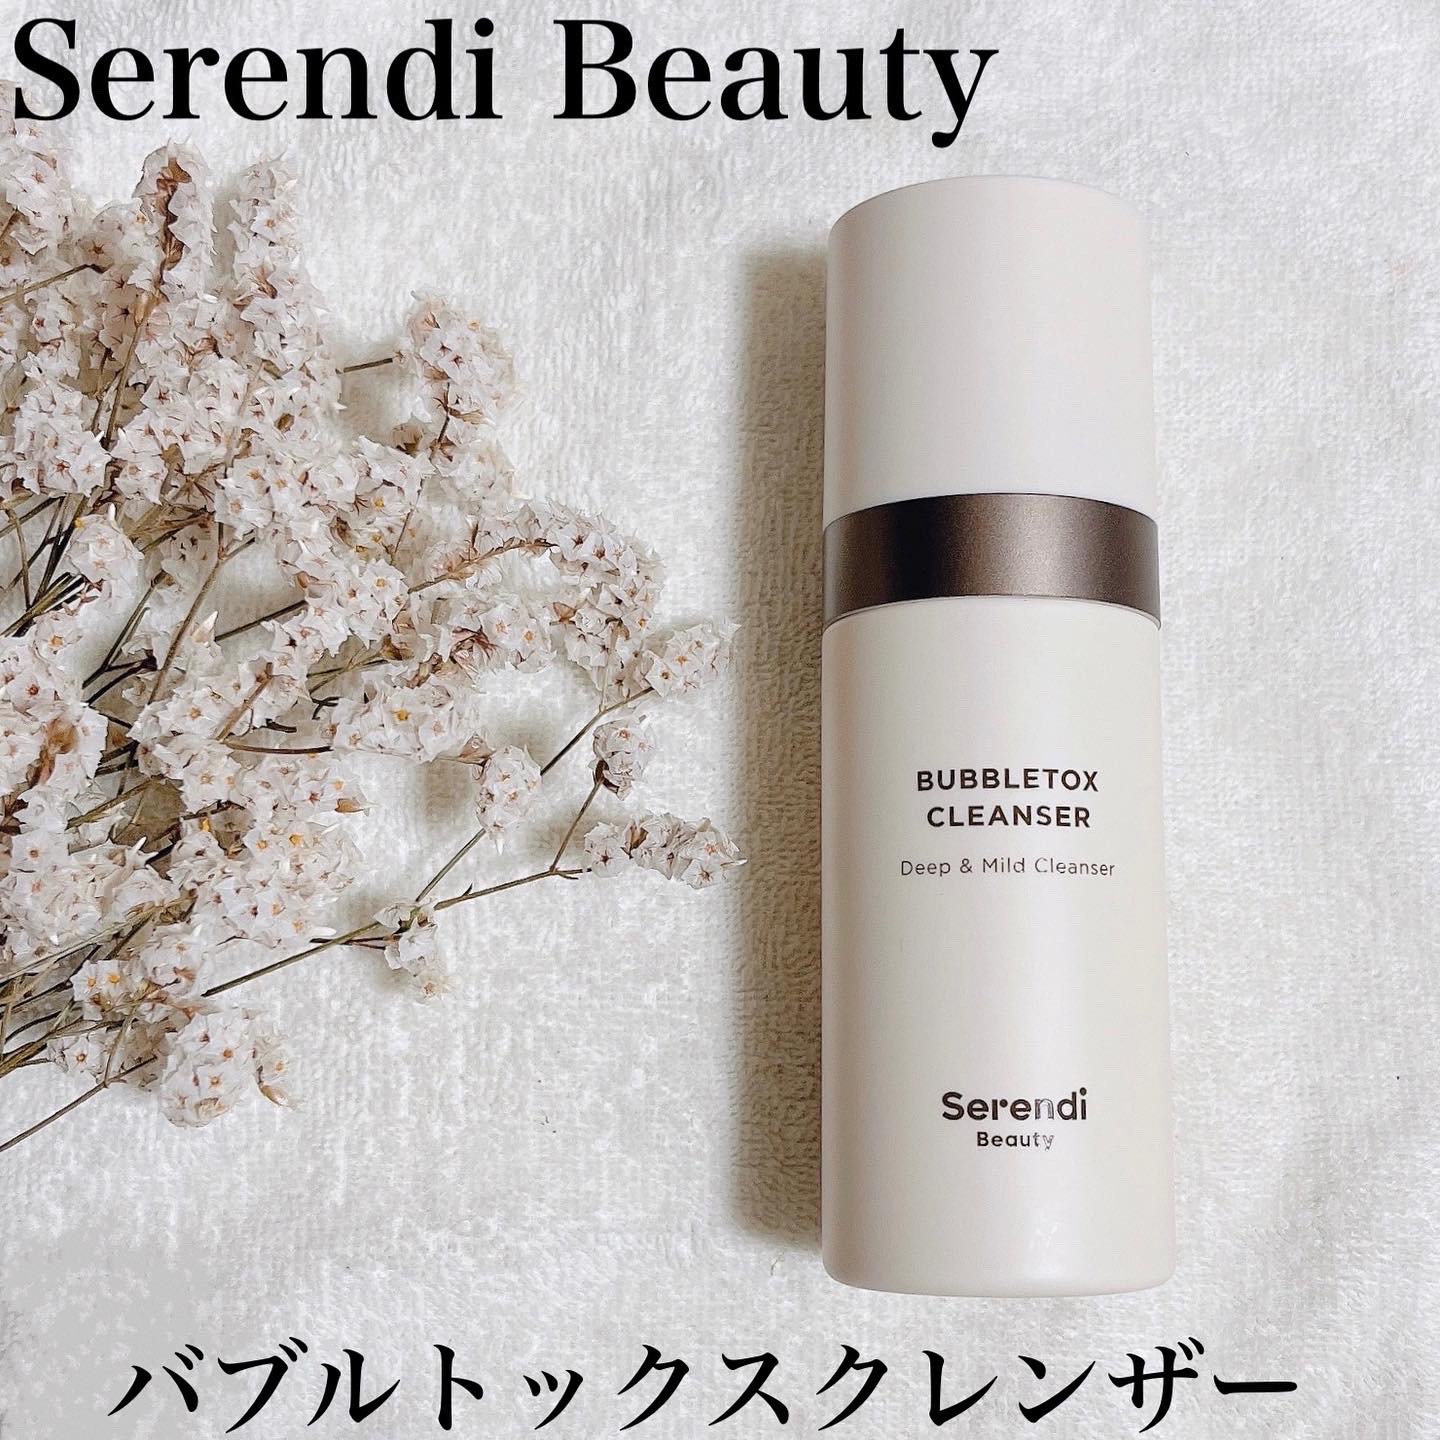 SERENDI BEAUTY / BUBBLE TOX CLEANSERの公式商品情報｜美容・化粧品 ...